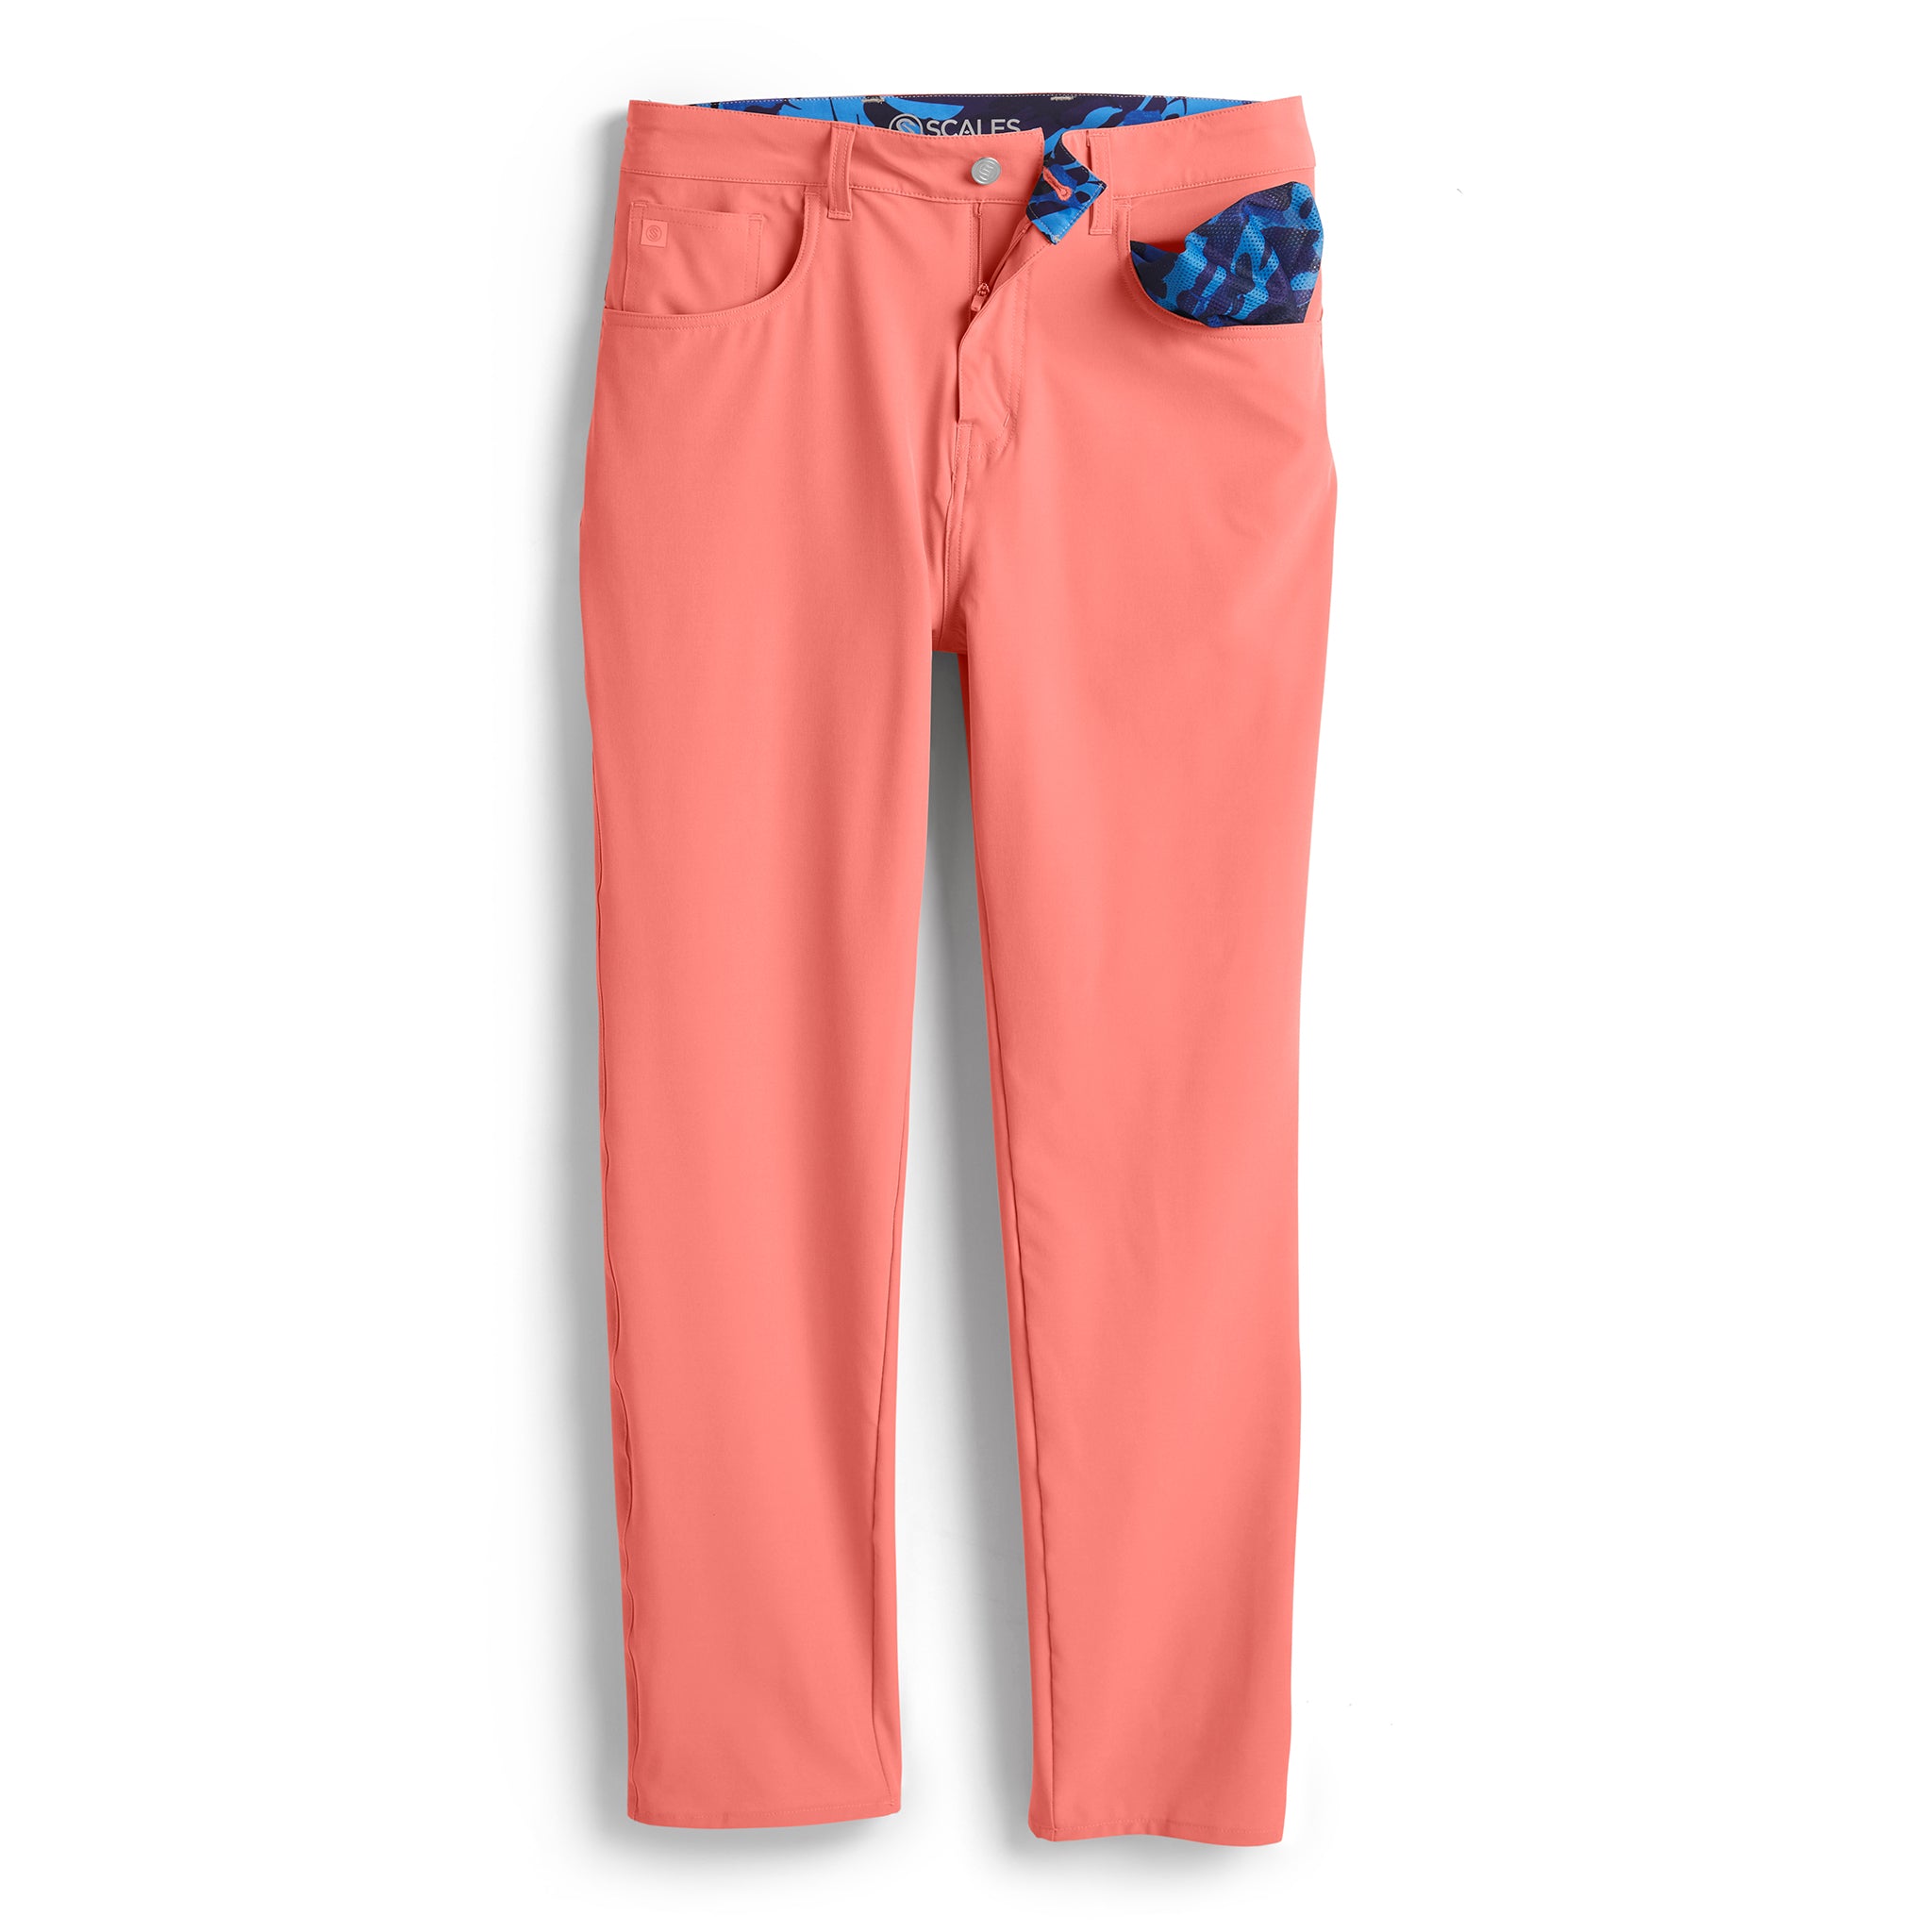 Dickies 874 Pants Mens Original Fit Classic Work Uniform Bottoms All Colors  | eBay